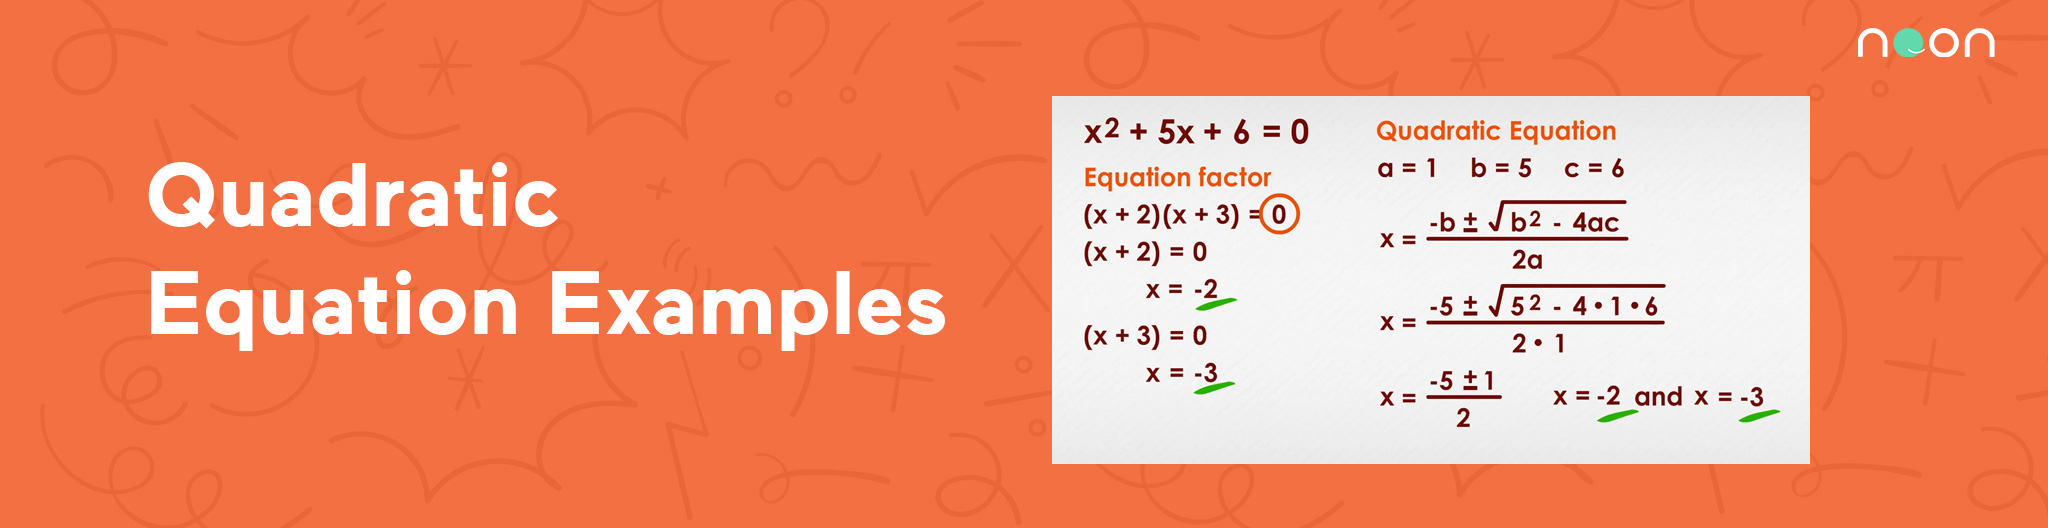 Quadratic Equation Examples 